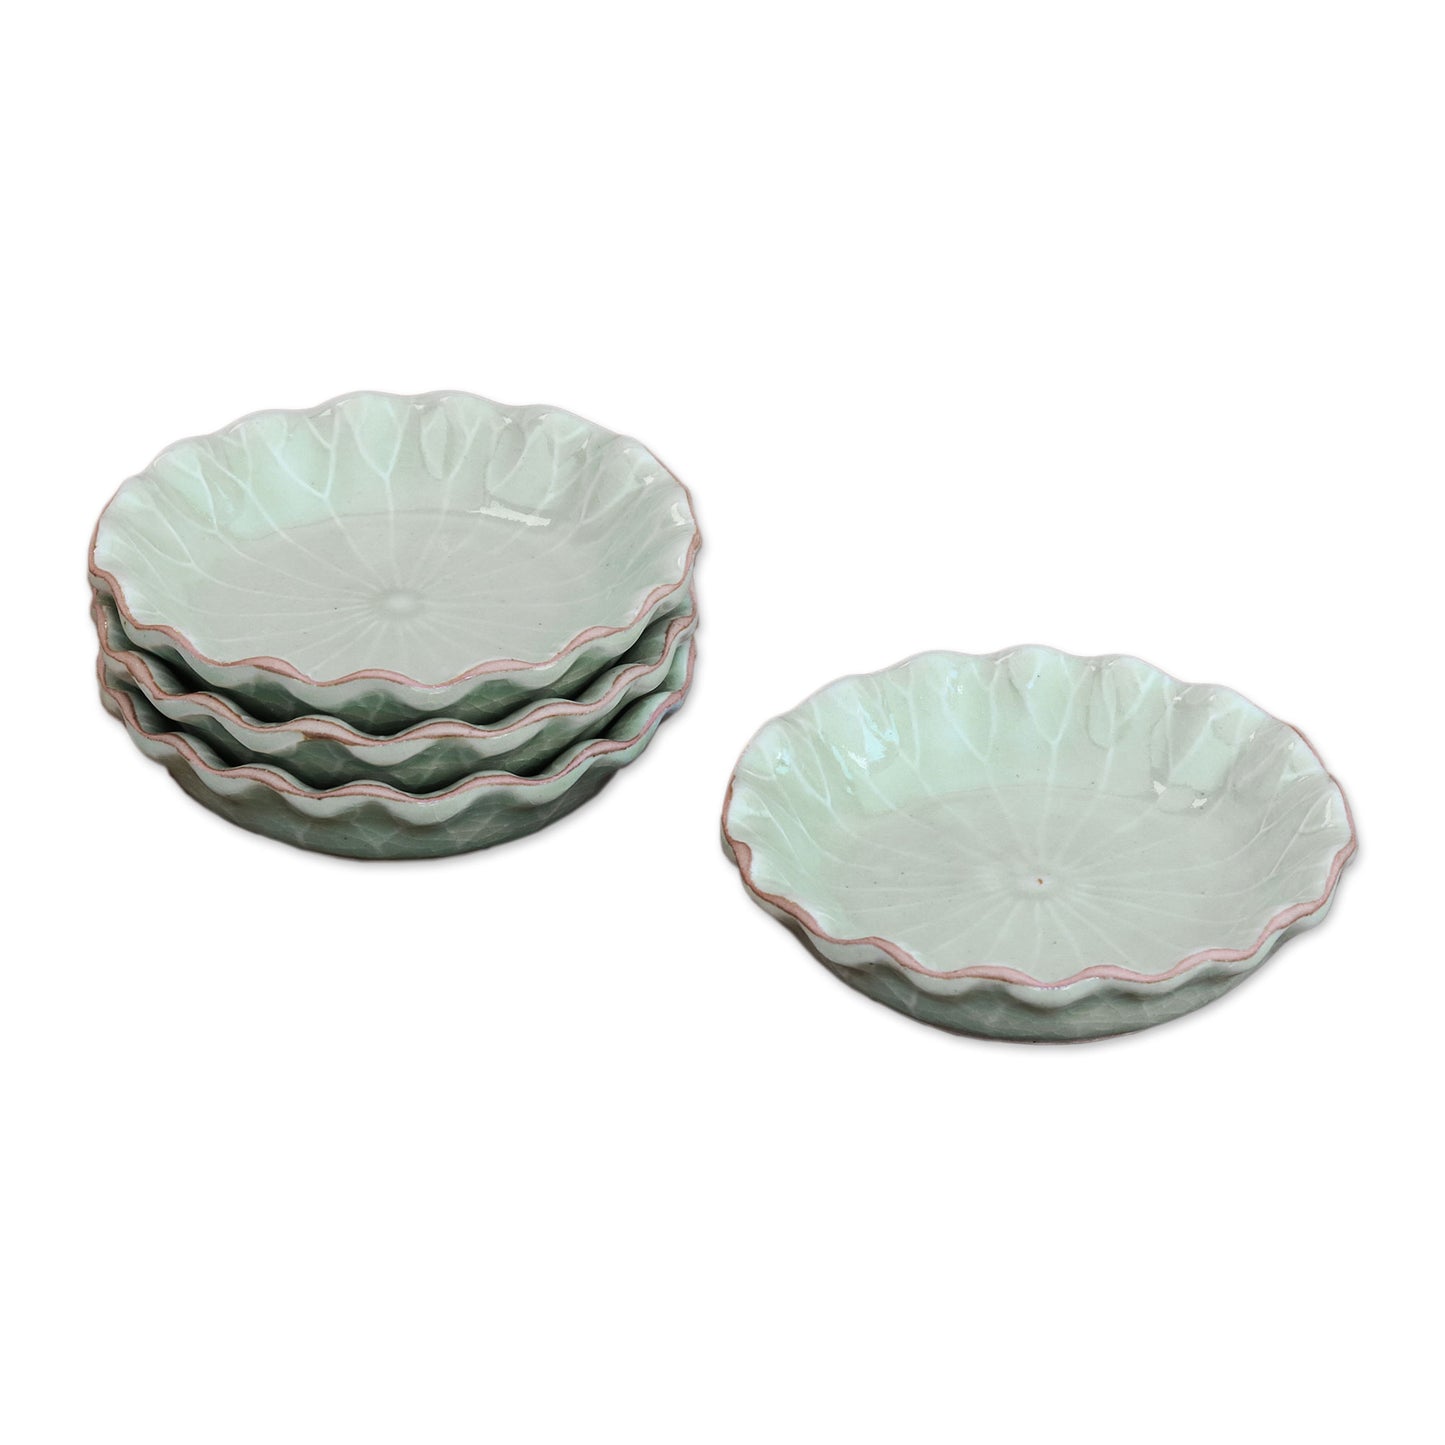 Festive Lotus Lotus Leaf Celadon Ceramic Appetizer Bowls (Set of 4)